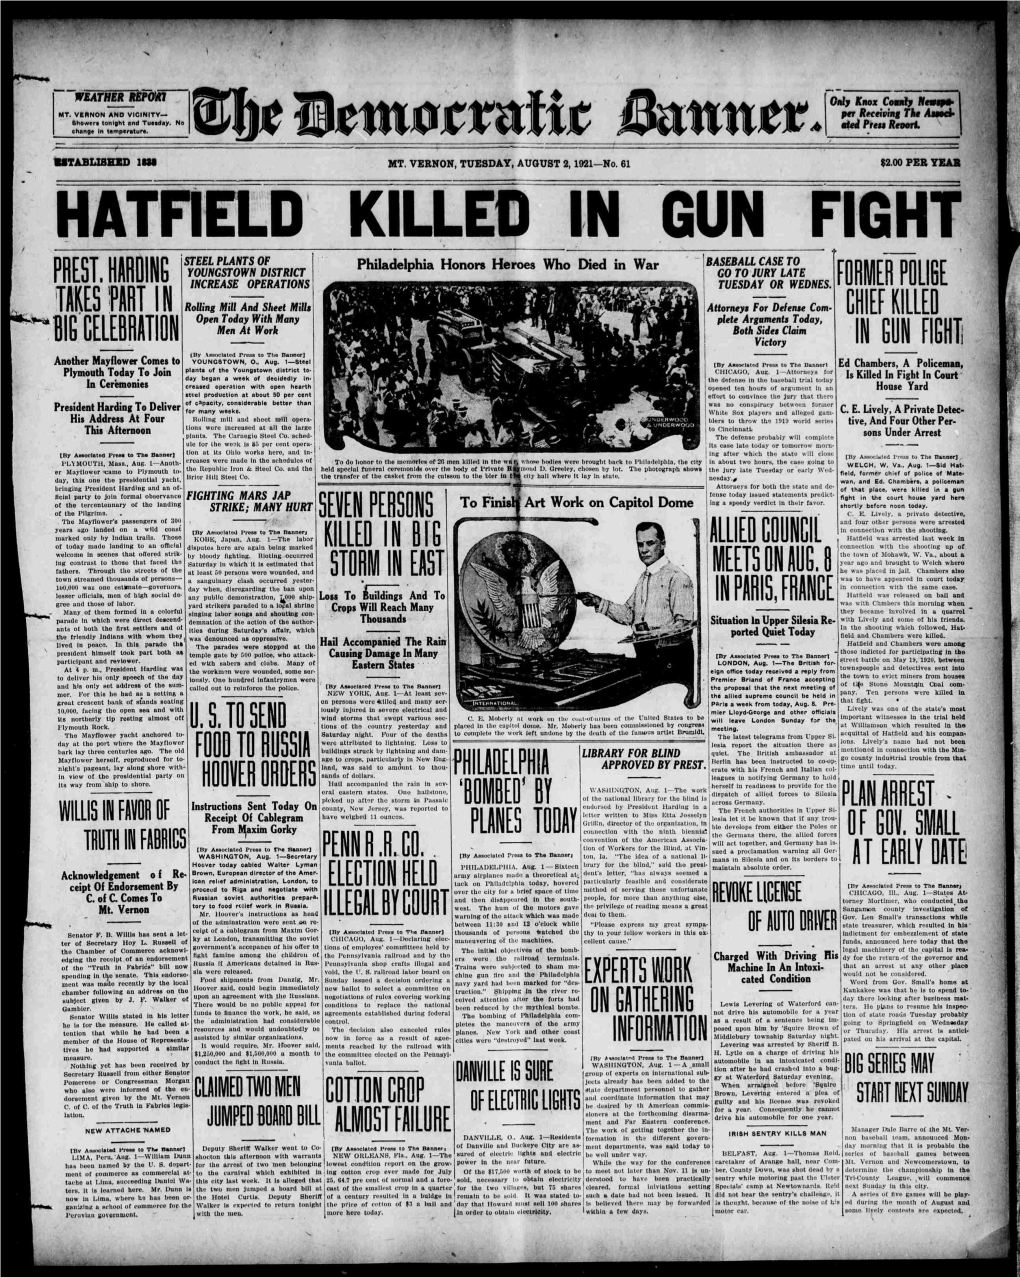 Hatfield Killed in Gun Fight